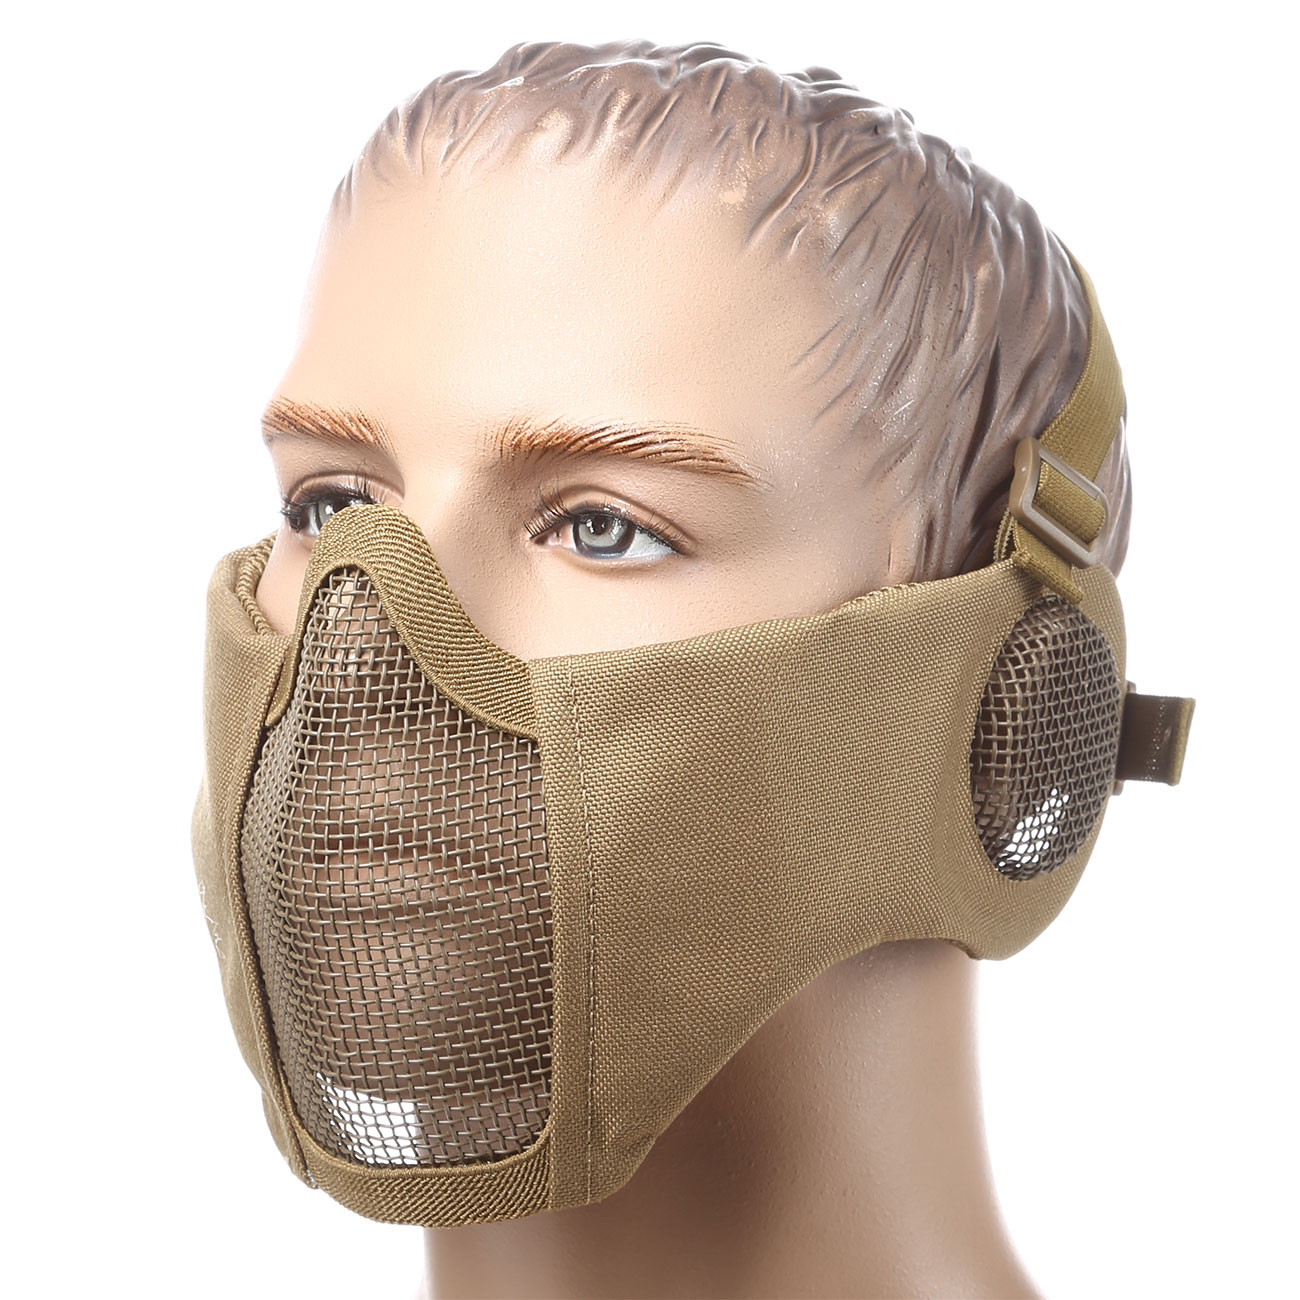 ASG Strike Systems Mesh Mask Gittermaske Full Lower Face mit Ohrabdeckung tan